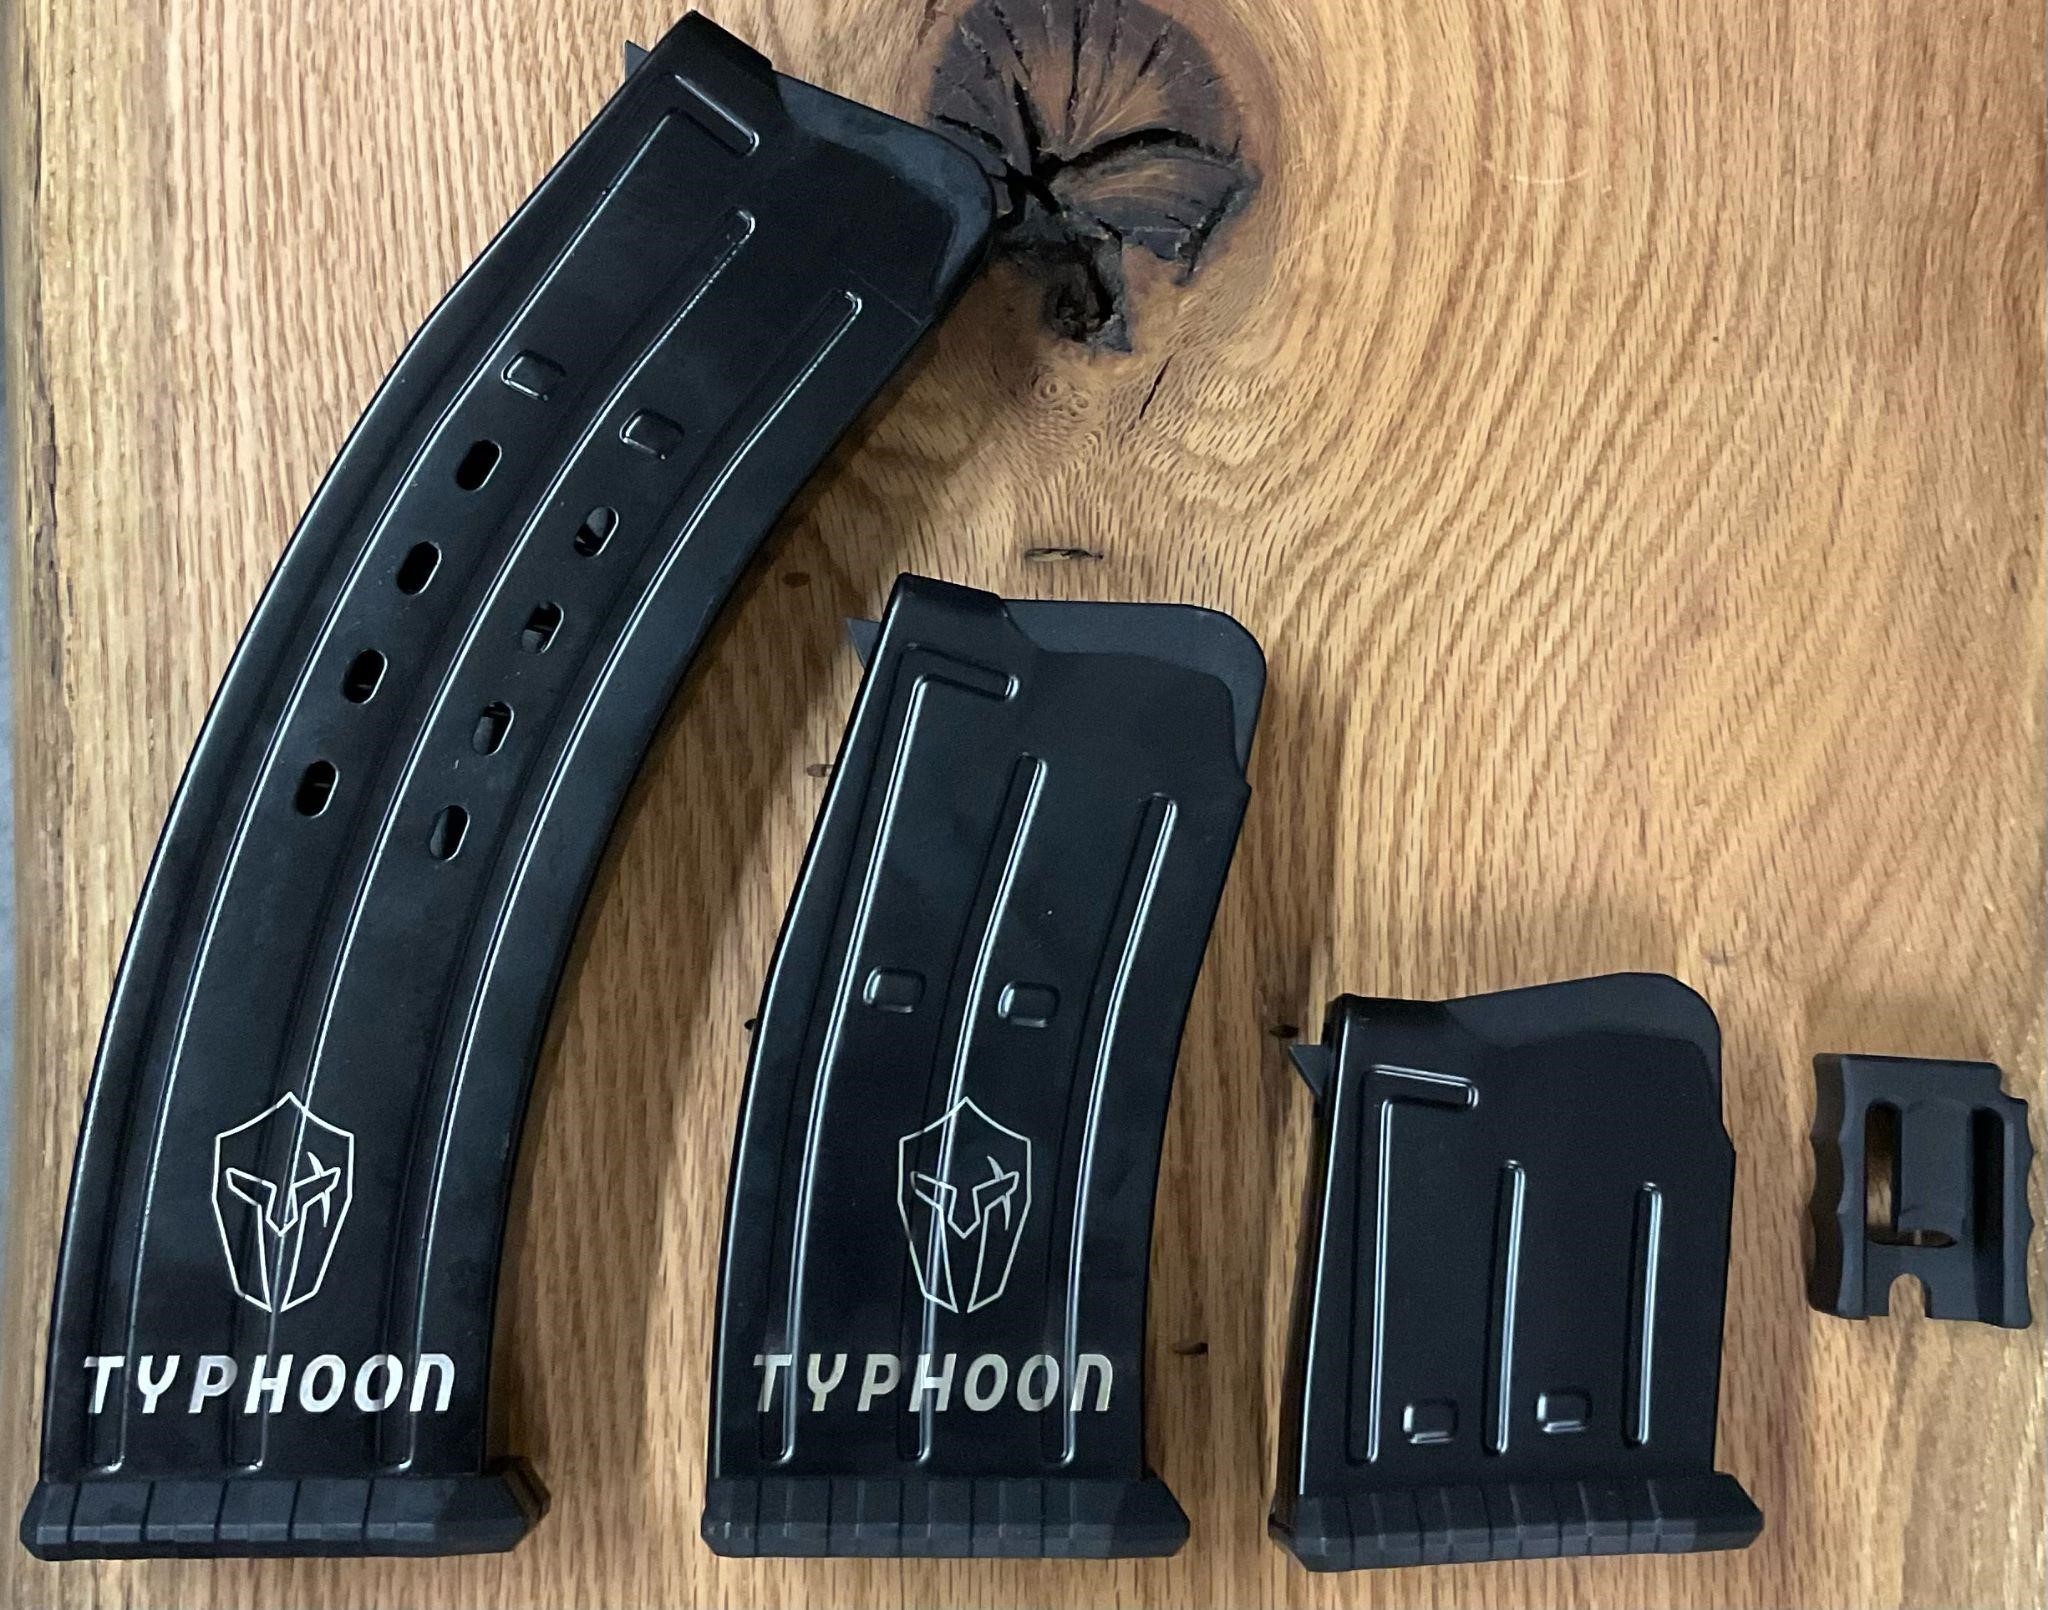 New 3 Pack of Typhoon Magazines 10,5,2 Round